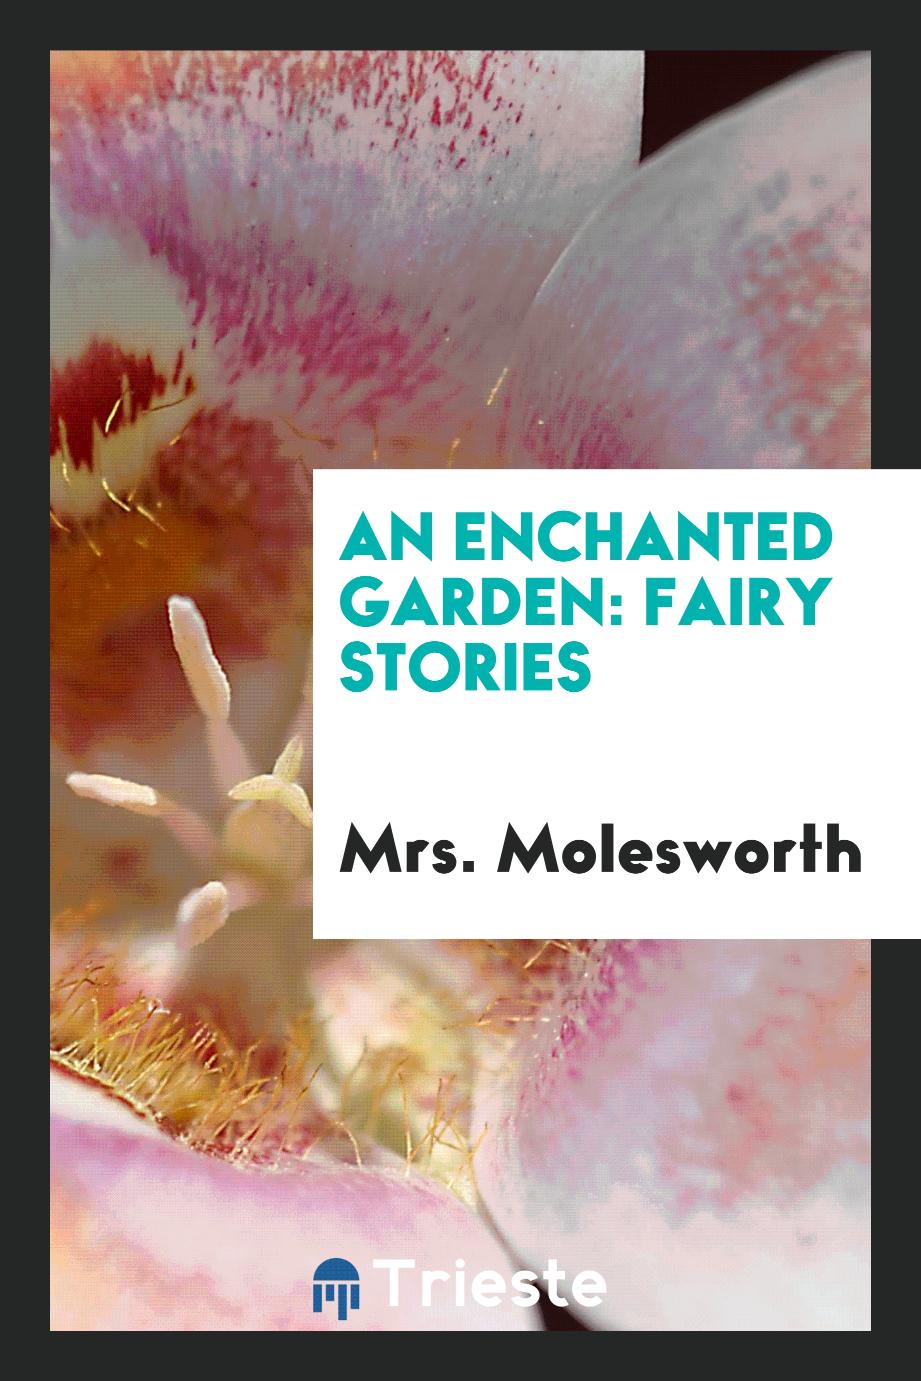 An enchanted garden: fairy stories